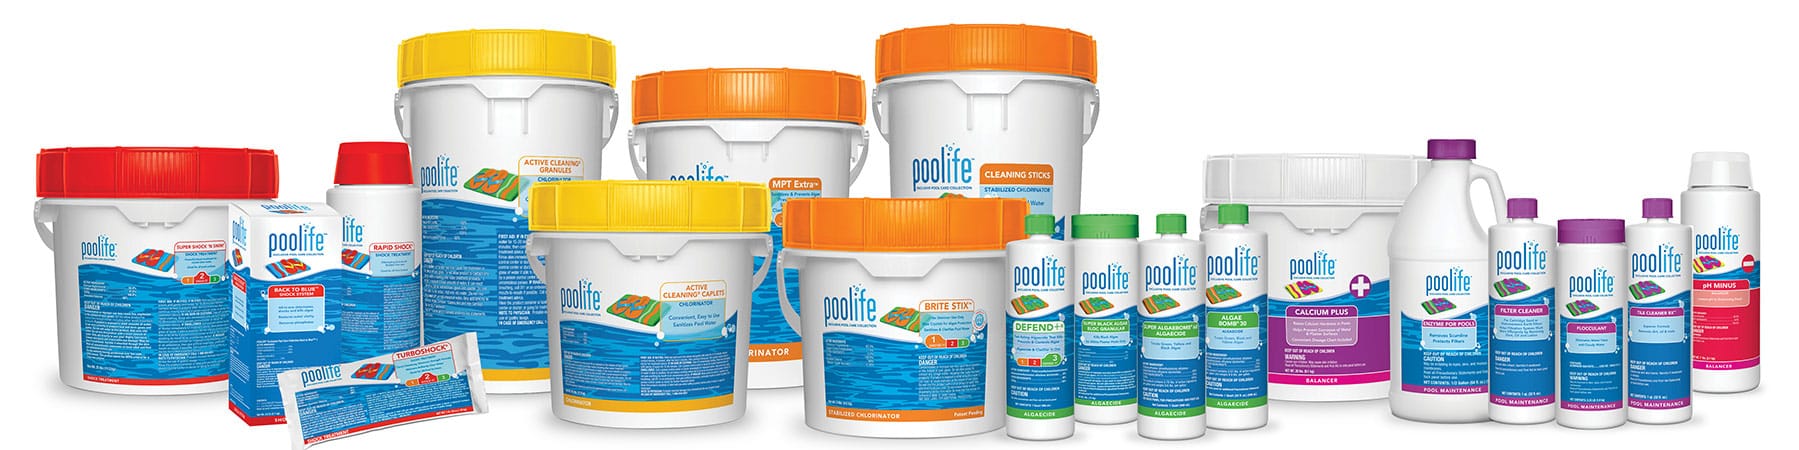 poolife swimming pool chemicals